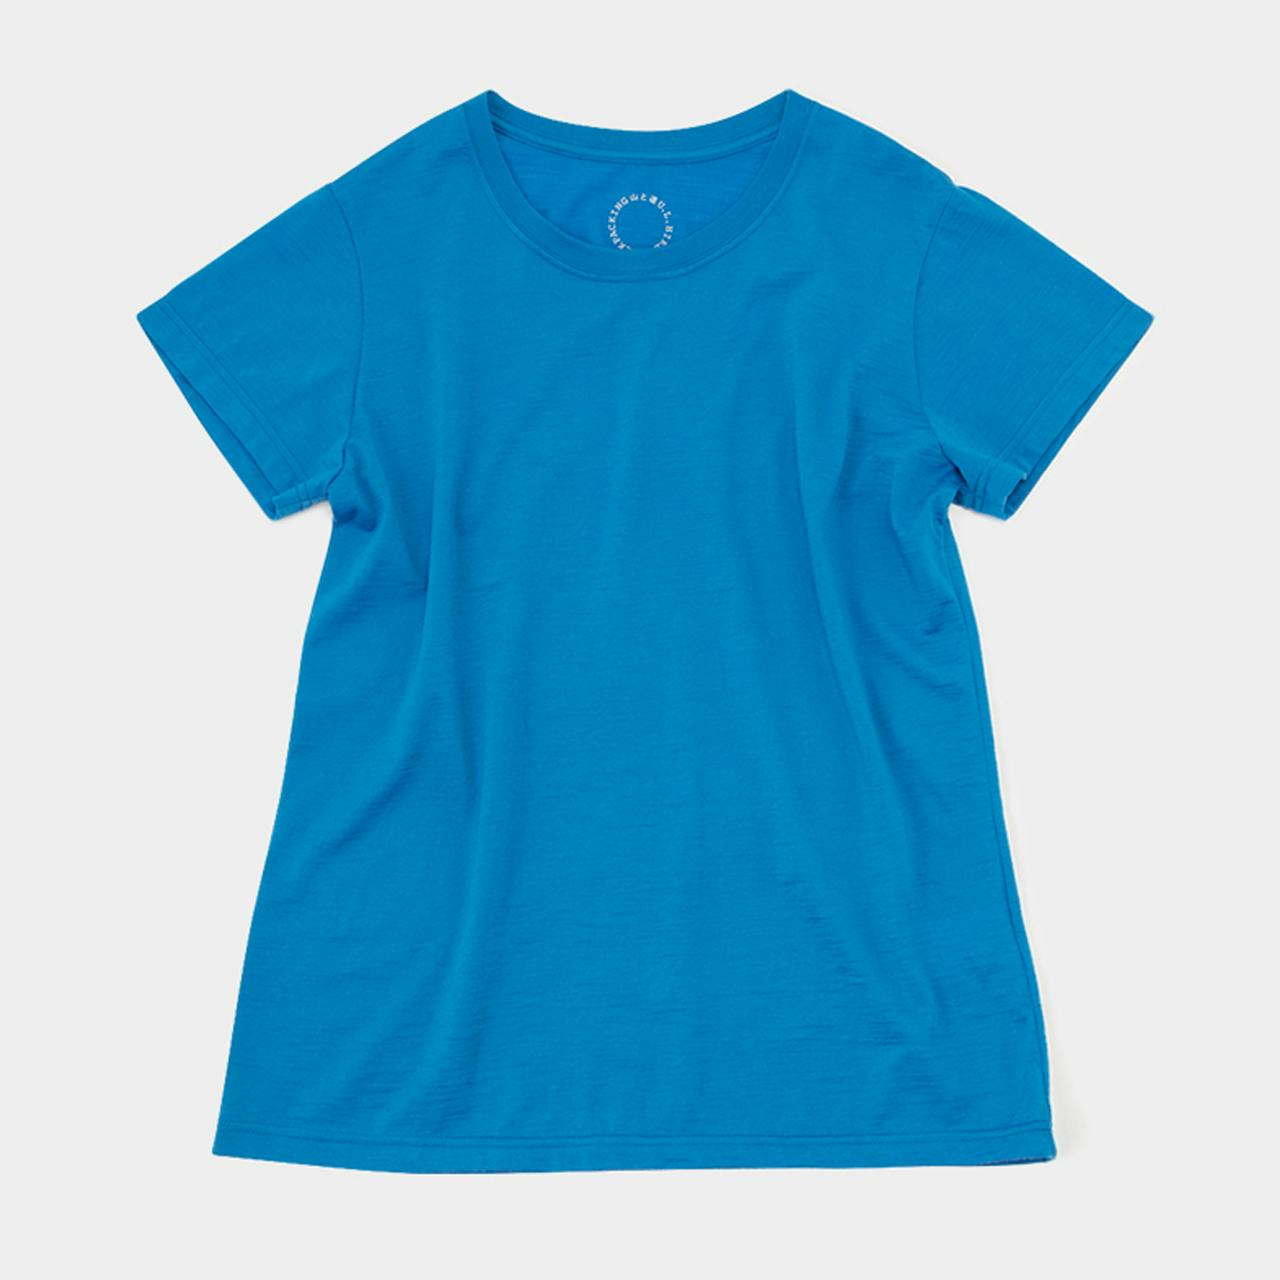 100% Merino Light French Sleeve<br>女性のためのメリノTシャツ<br>1/11(水)18:00に再入荷